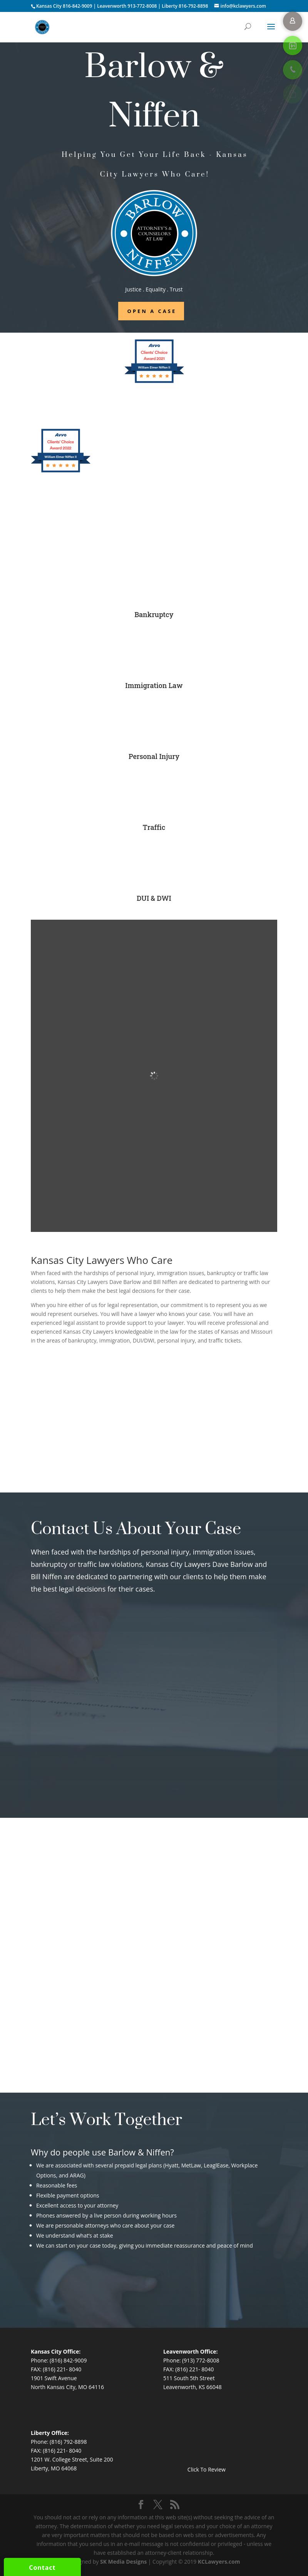 24/7 Legal - Kansas City MO Lawyers